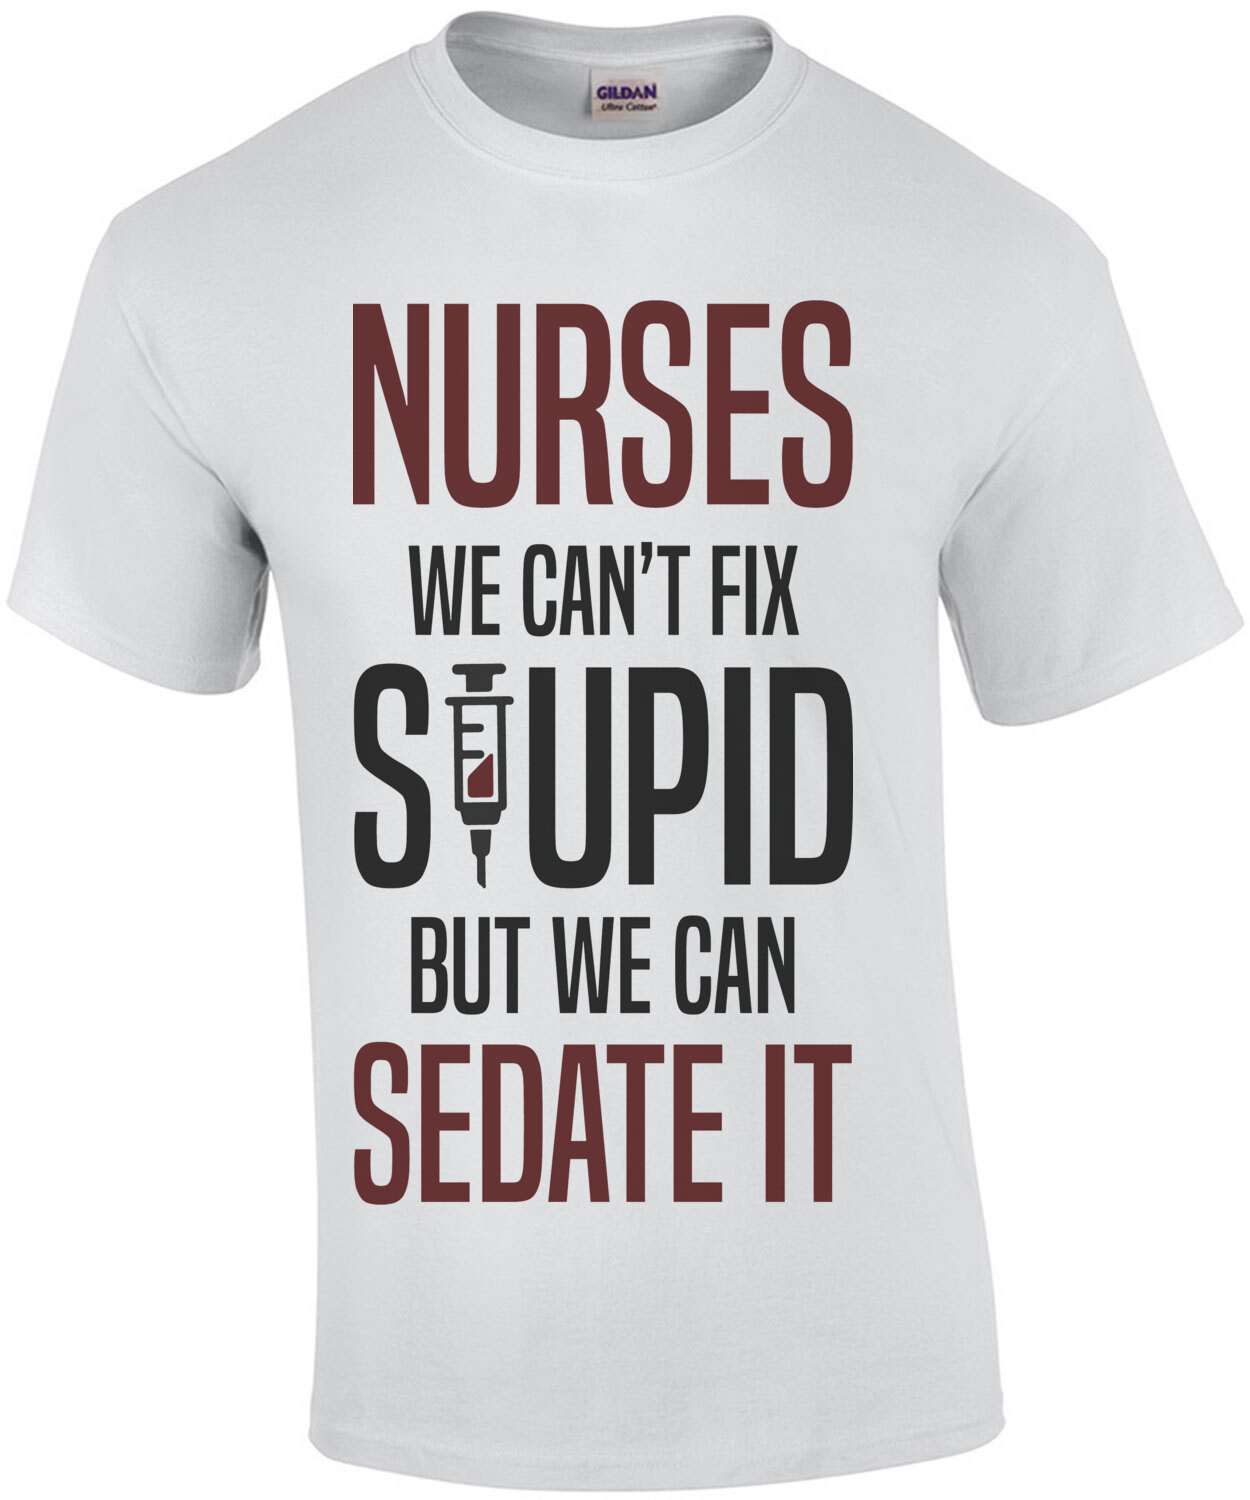 Nurses - we can't fix stupid but we can sedate it - funny nurse t-shirt